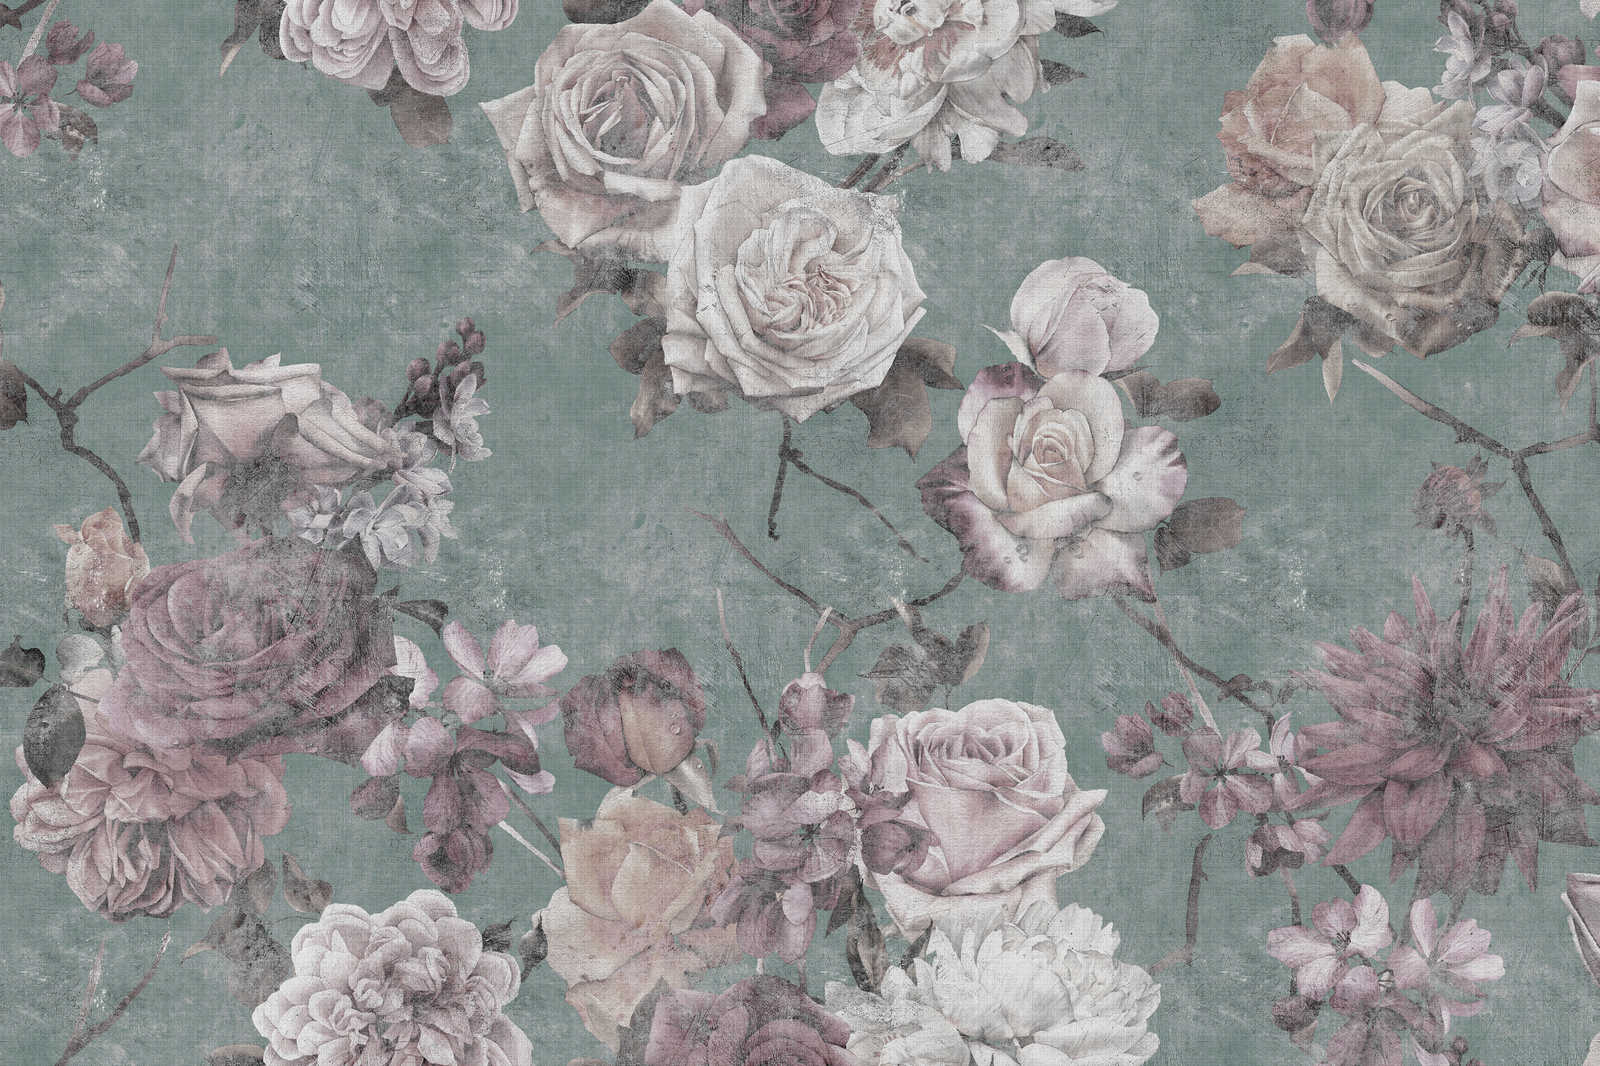             Sleeping Beauty 2 - Leinwandbild Rosenblüten im Vintage Stil – 0,90 m x 0,60 m
        